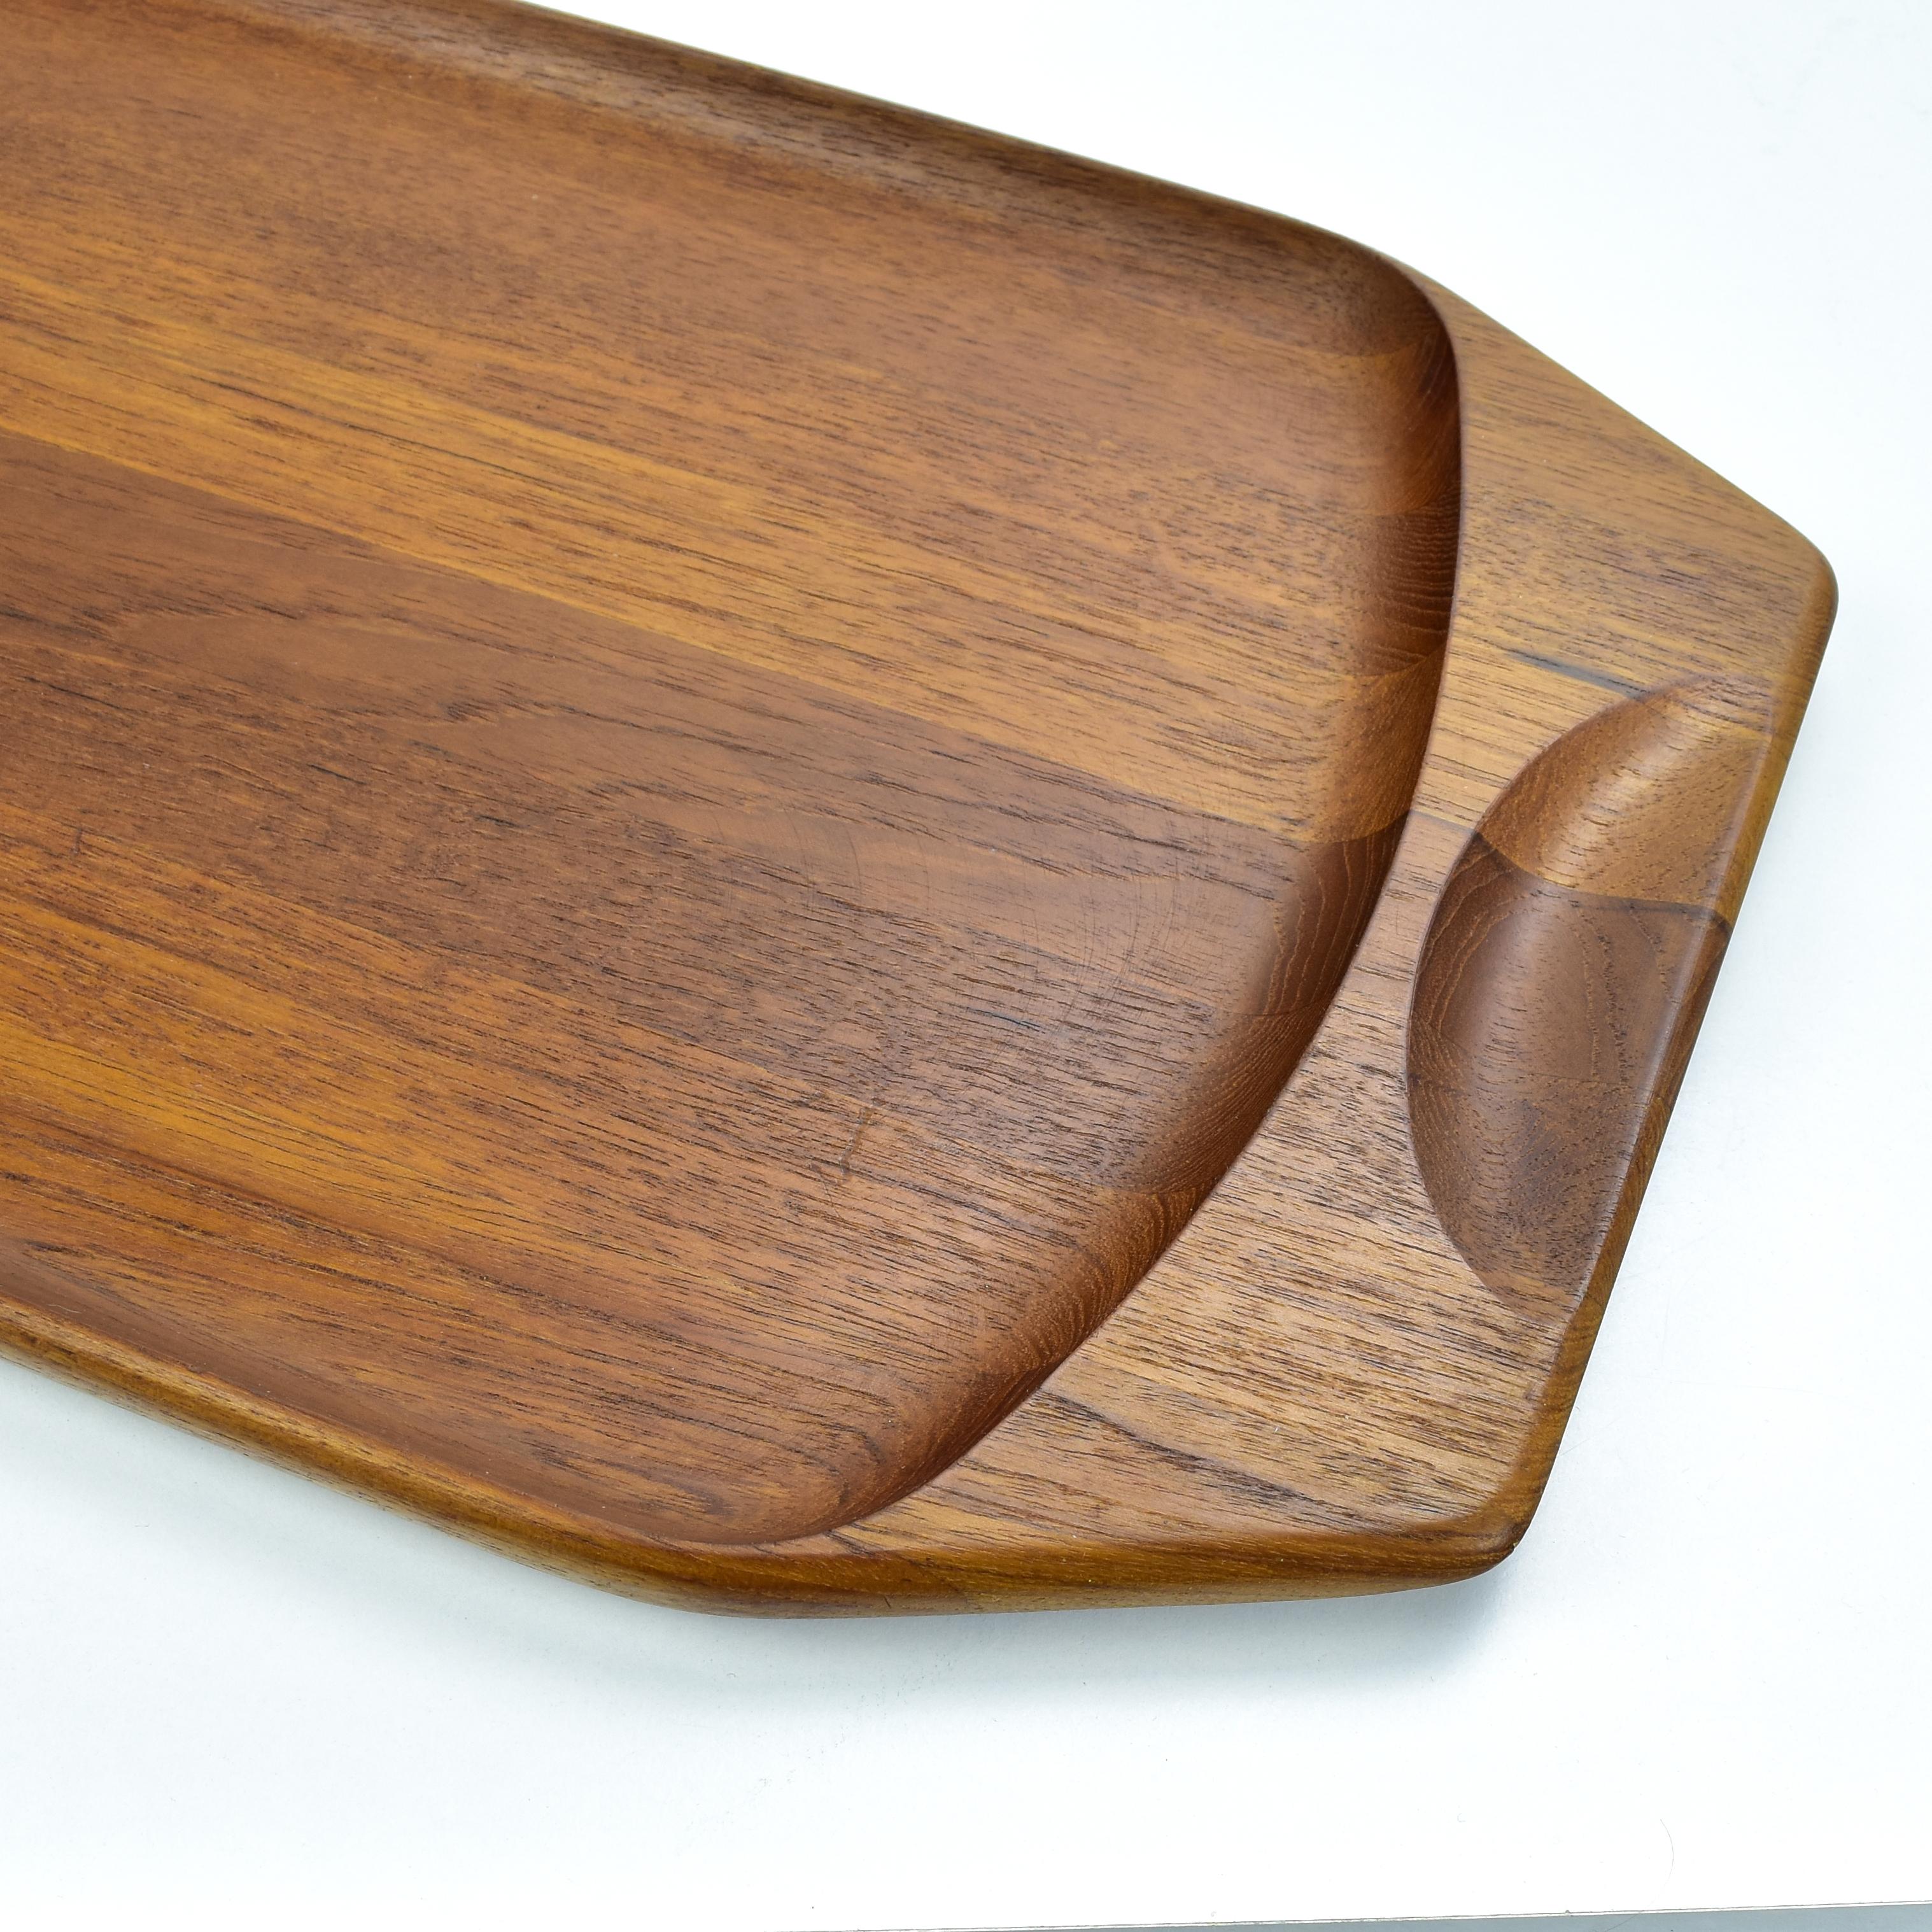 Hand-Crafted 1950s Danish Modern Design Teak Wood Serving Tray by Jens Quistgaard Dansk MCM For Sale